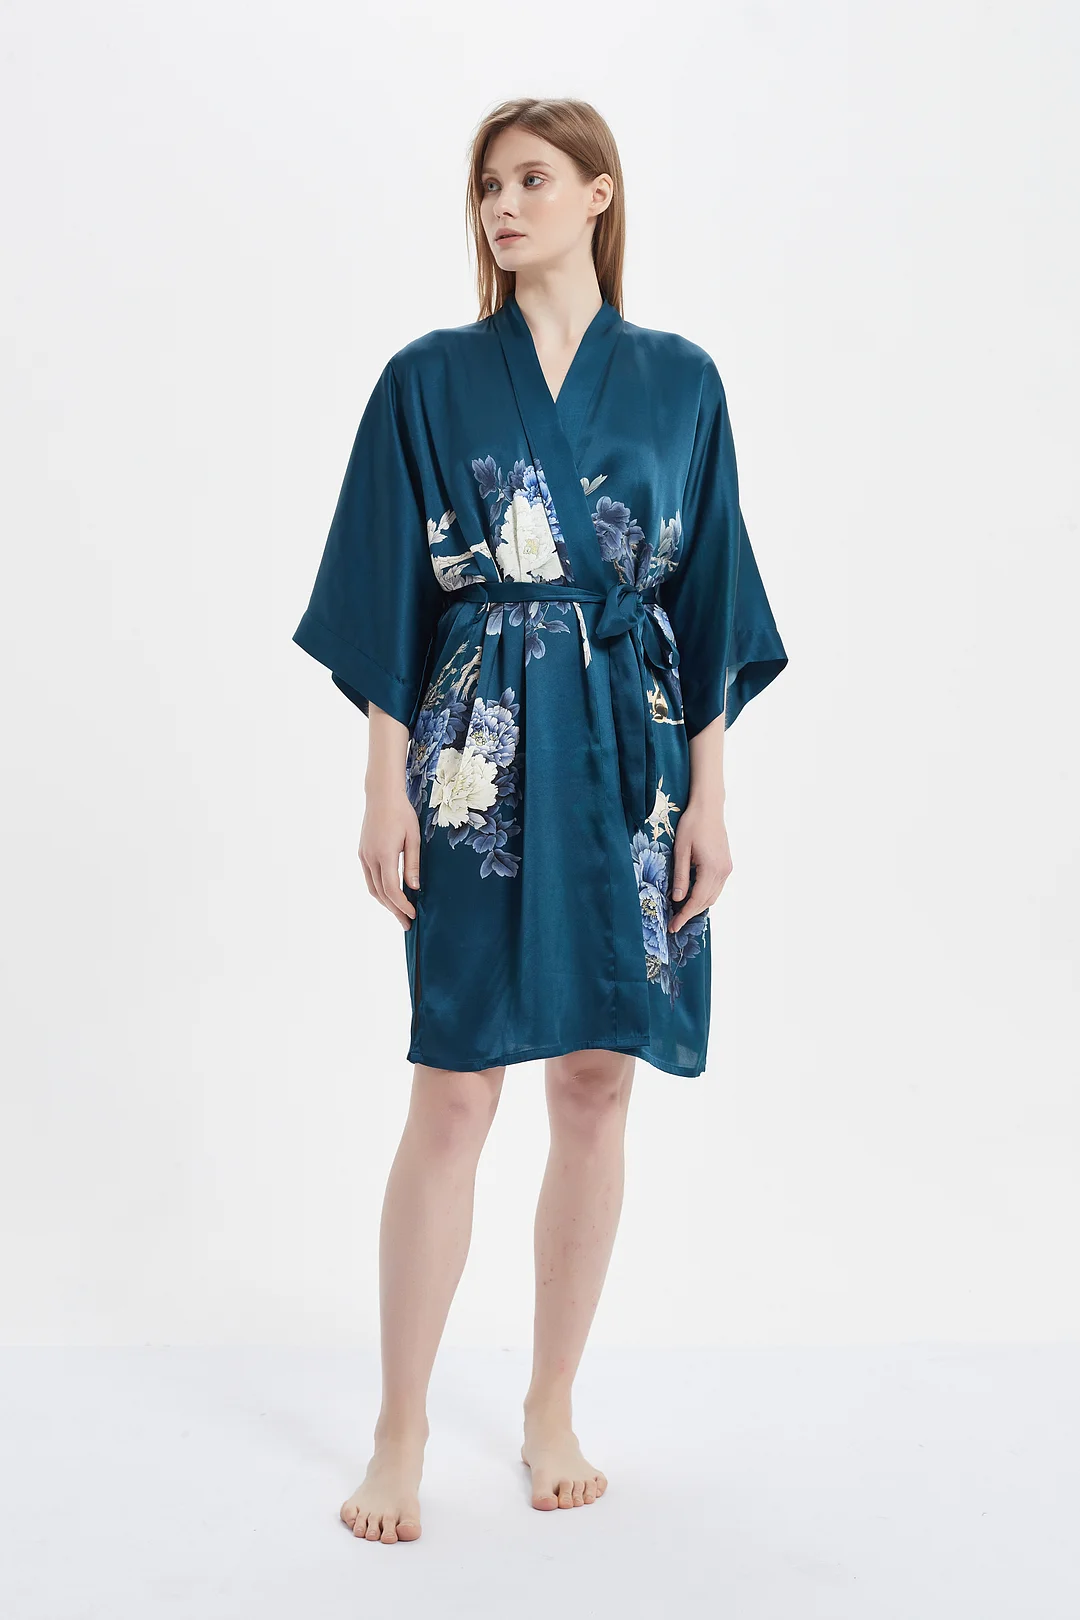 19 MOMME Kimono en soie imprimé floral bleu - grande taille 1